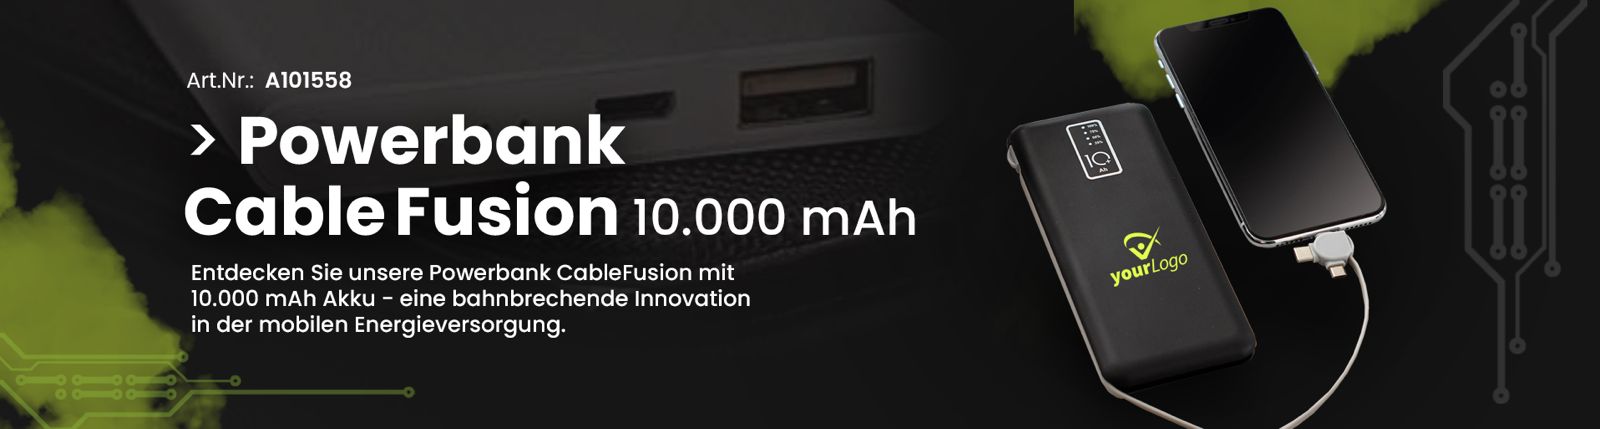 Powerbank-Promotion_New